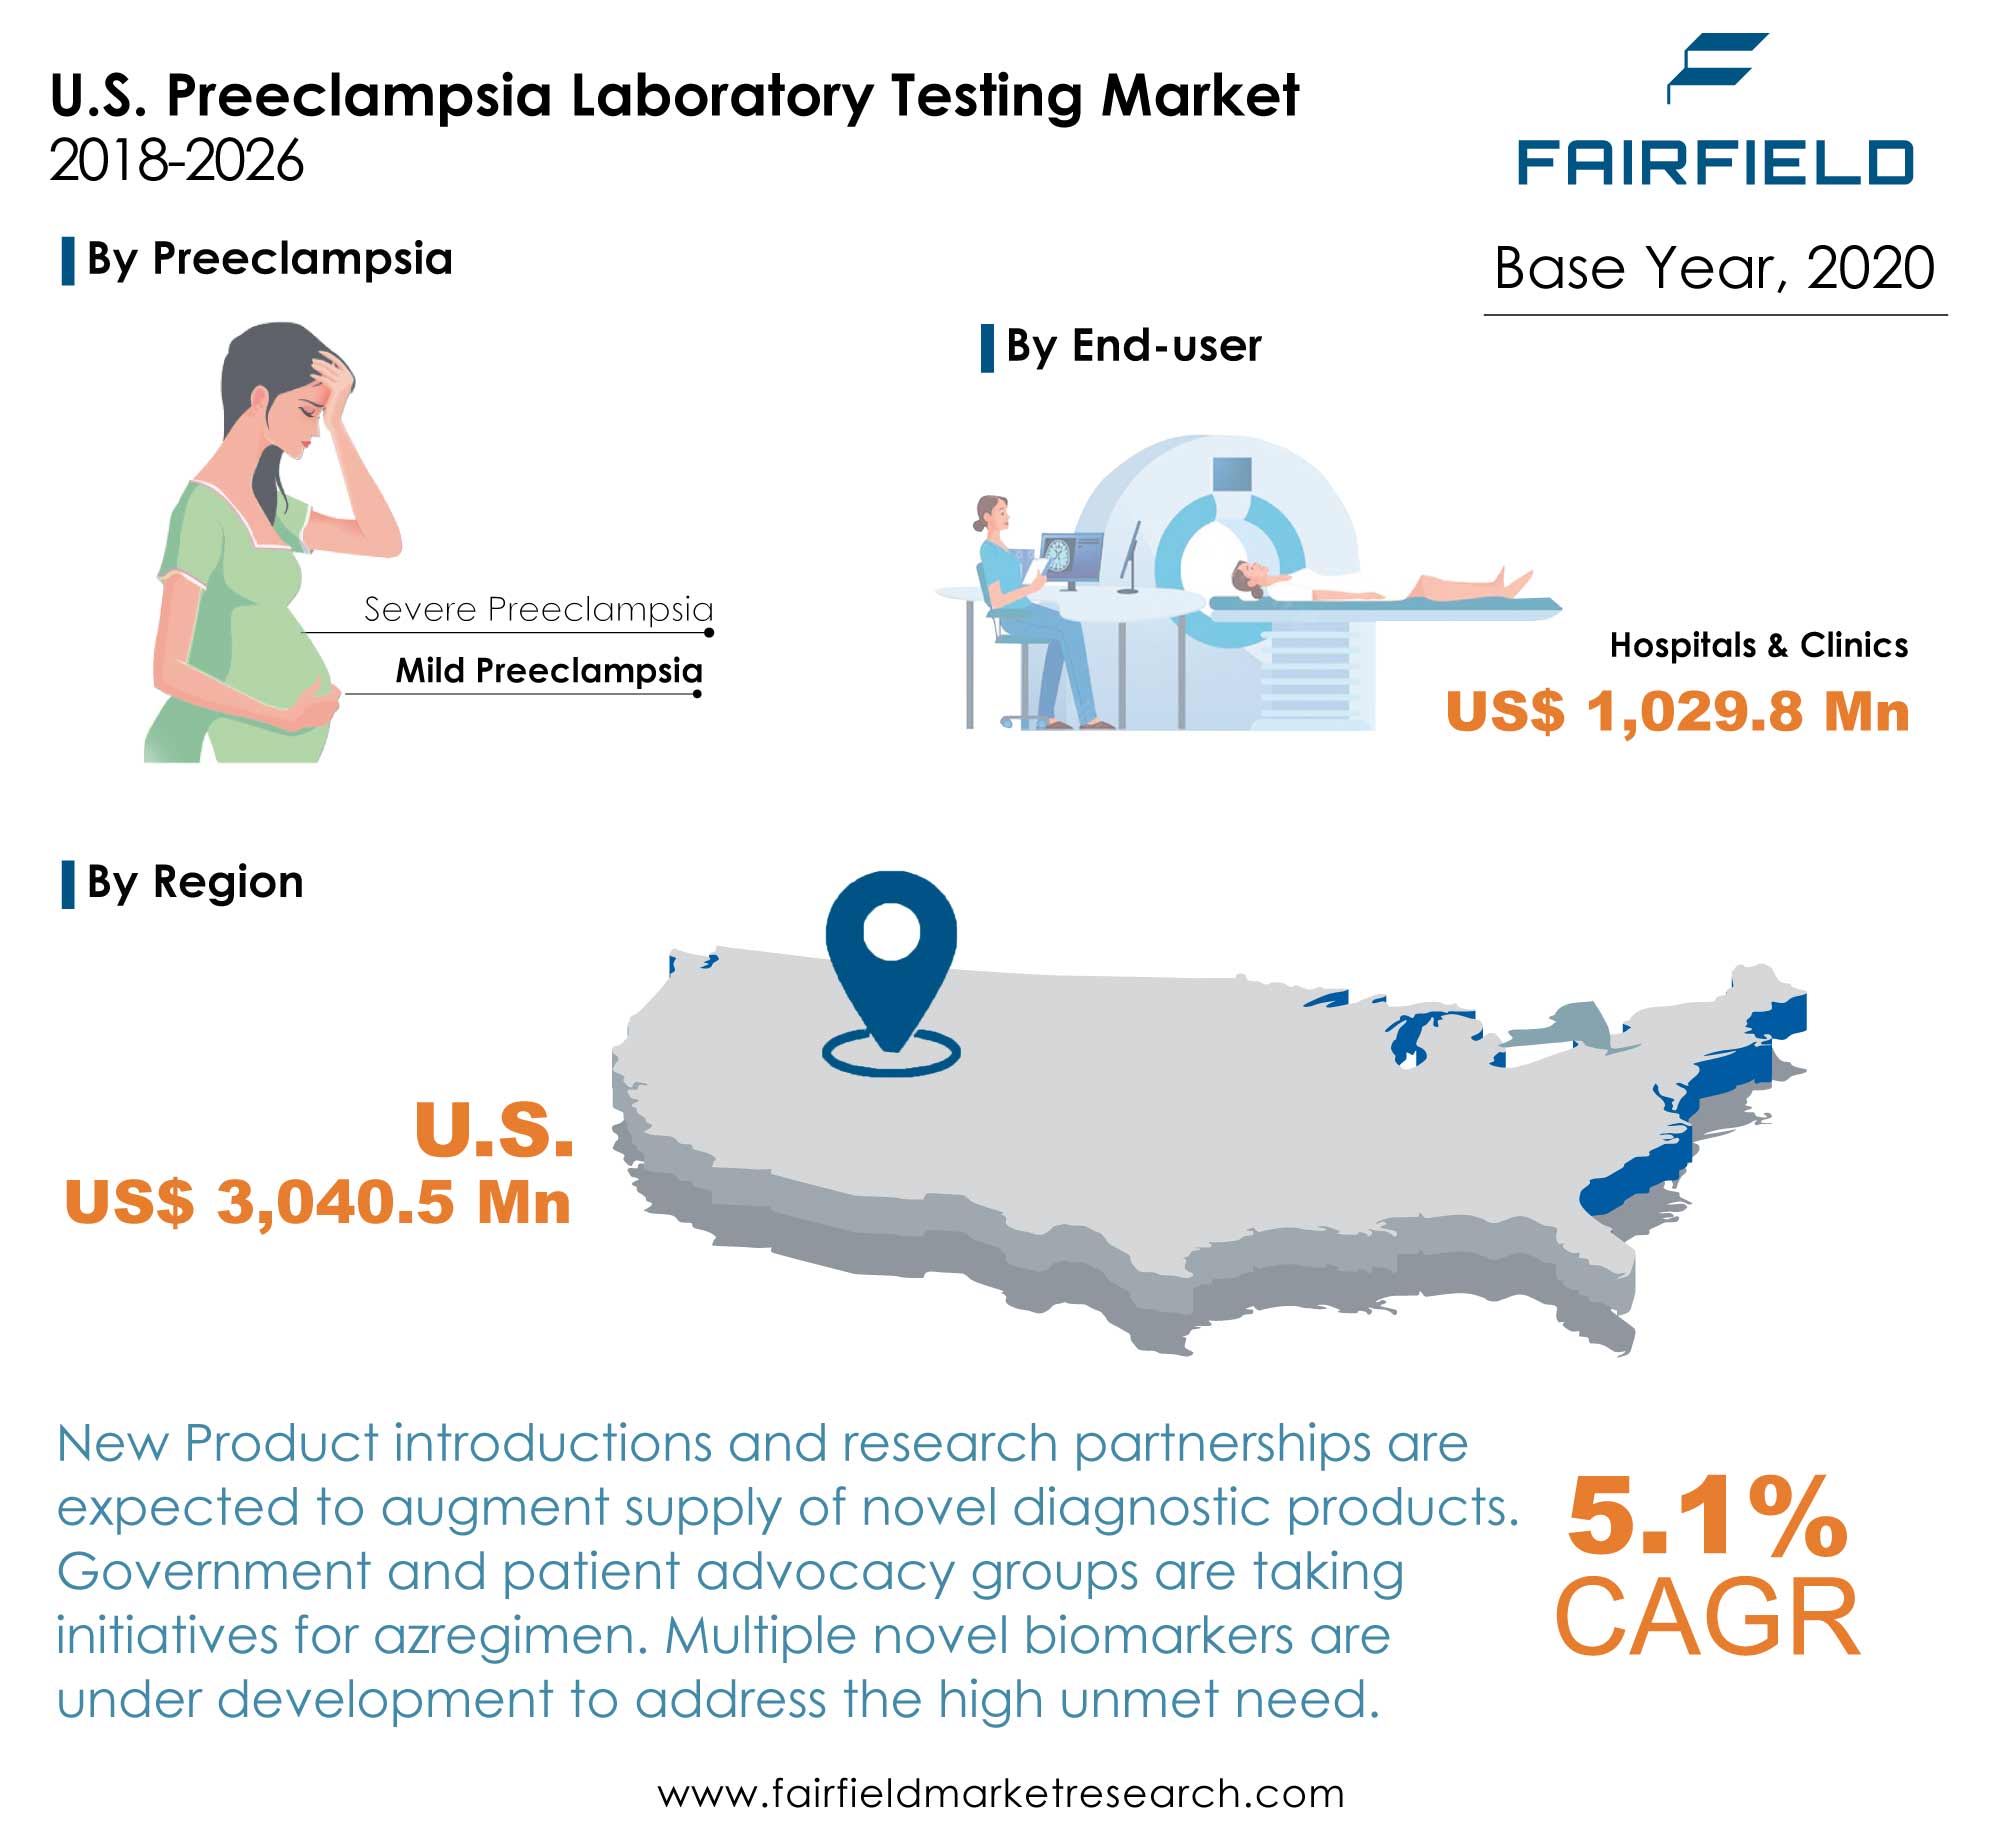 U.S. Preeclampsia Laboratory Testing Market